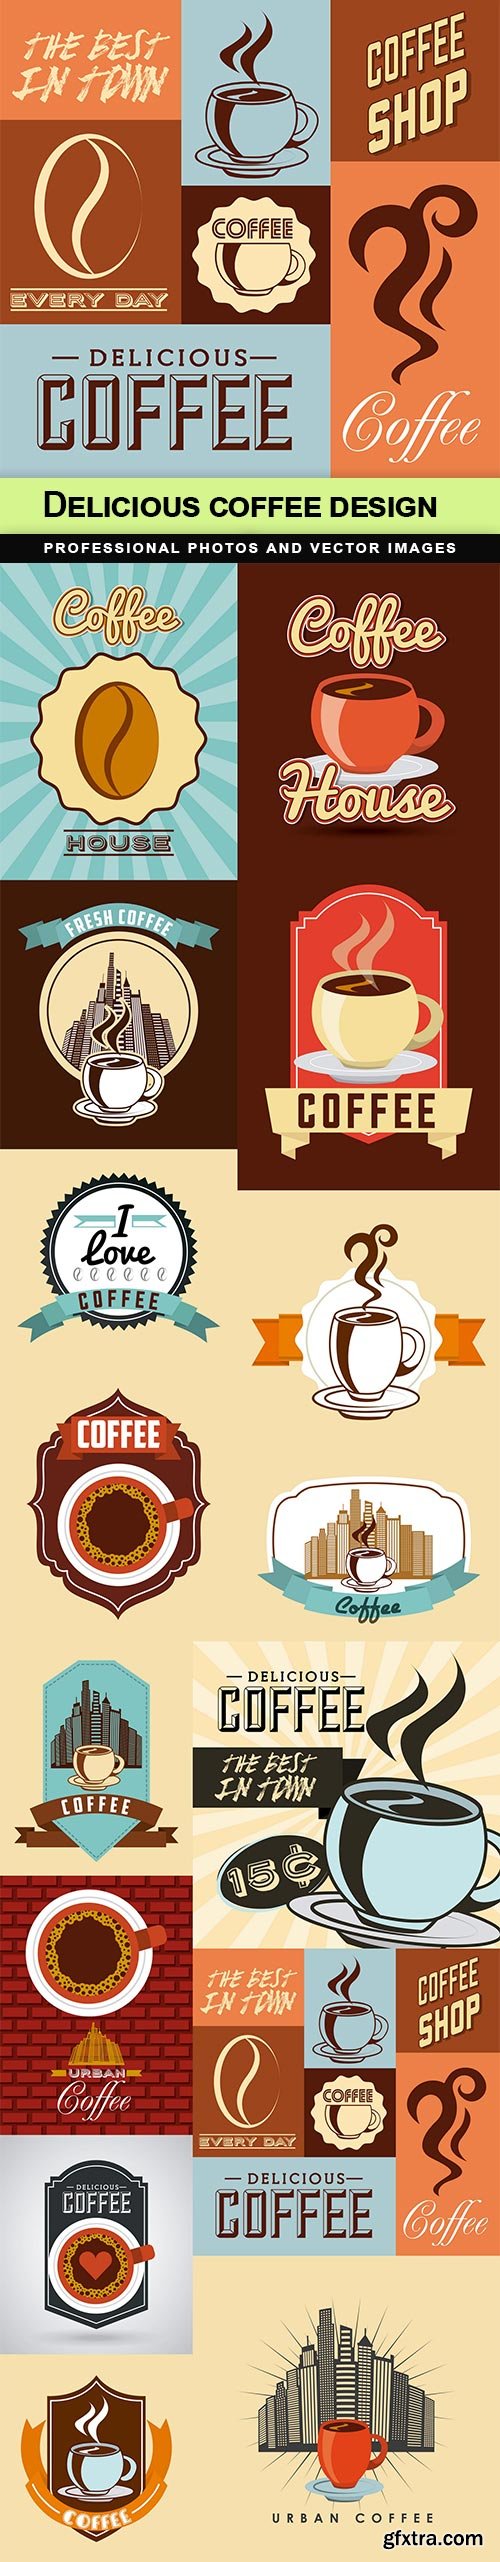 Delicious coffee design - 15 EPS